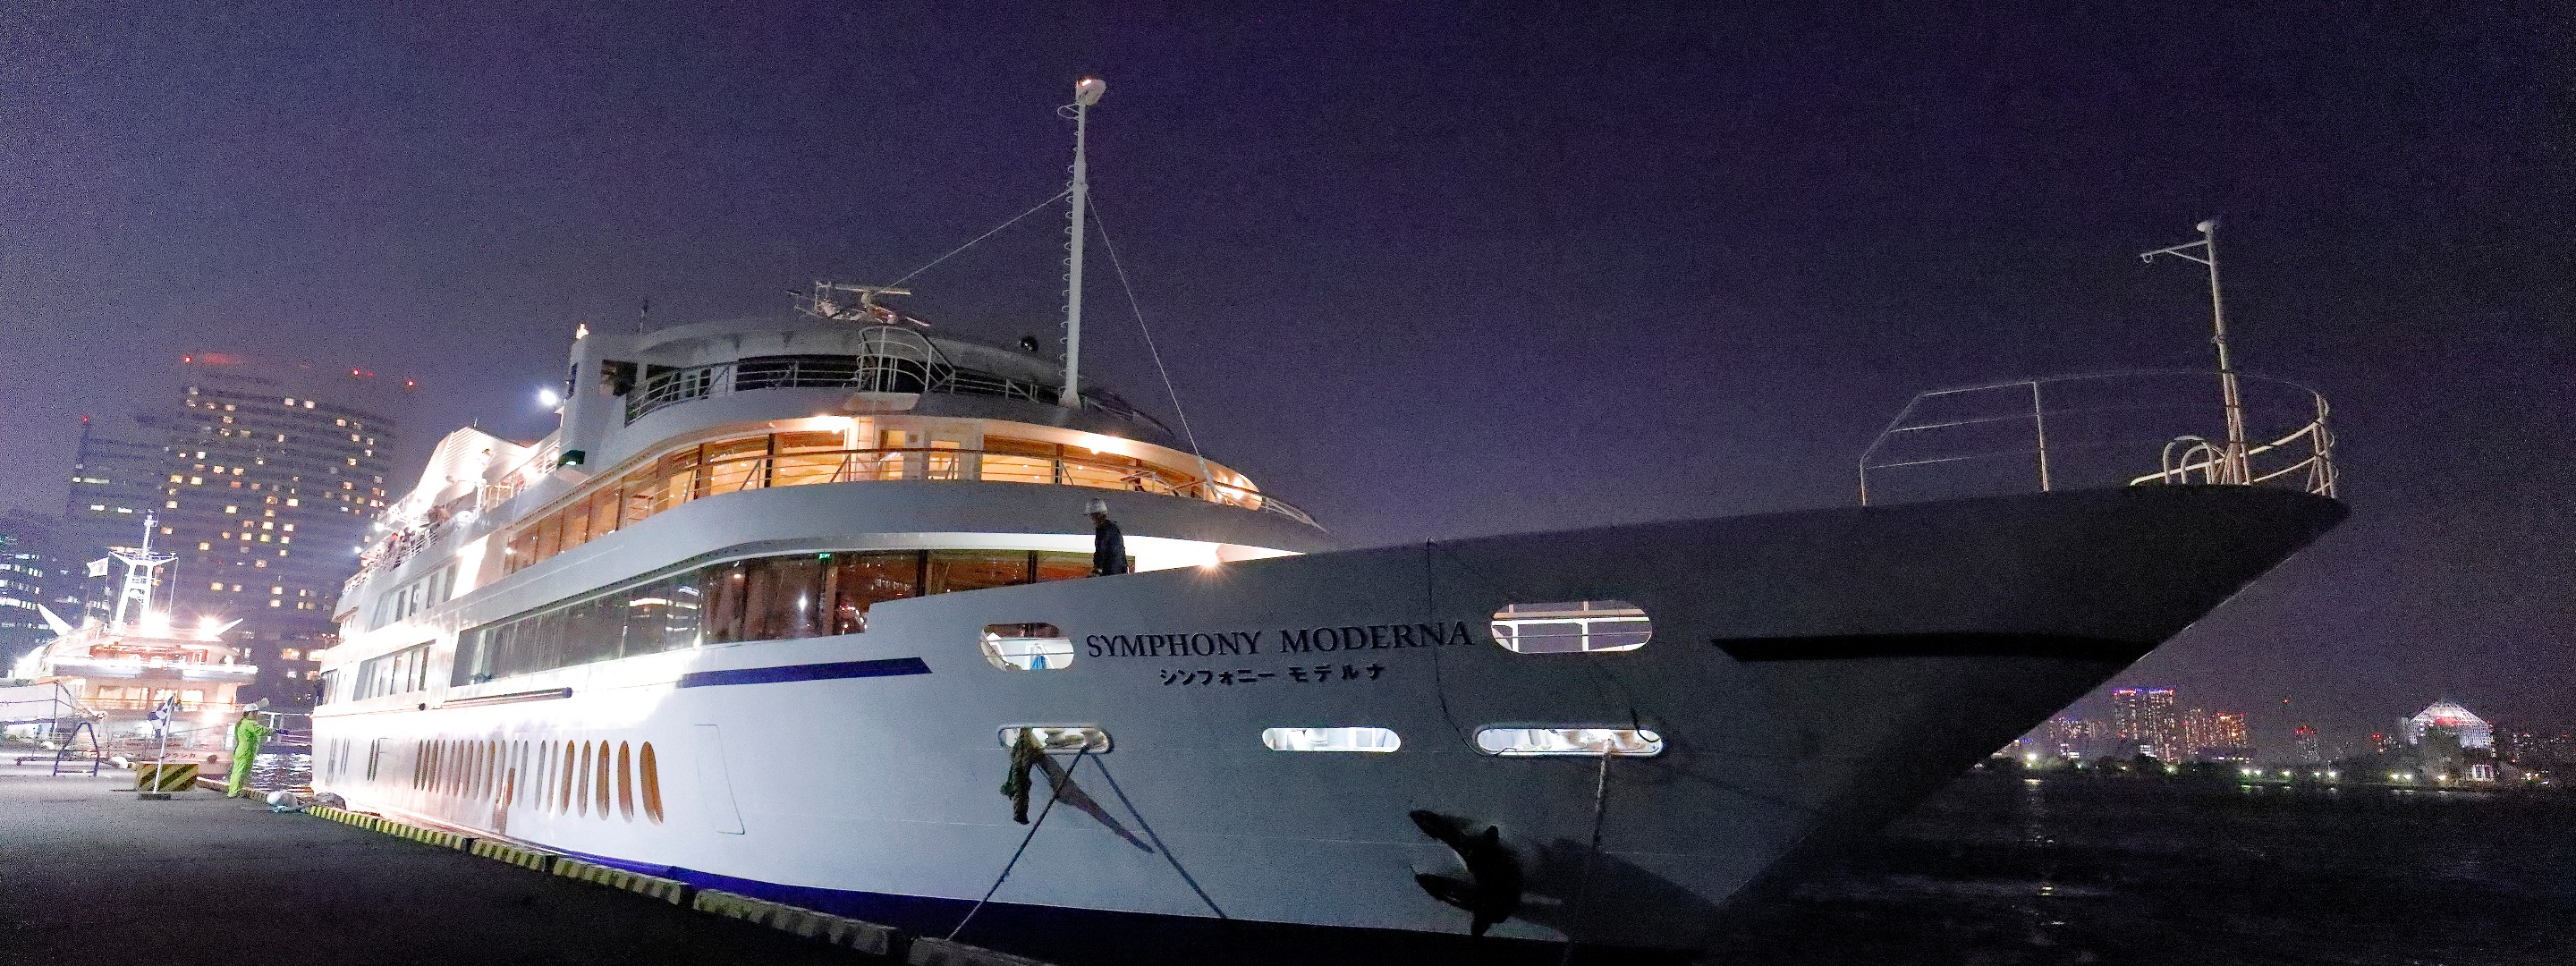 symphony cruise tokyo